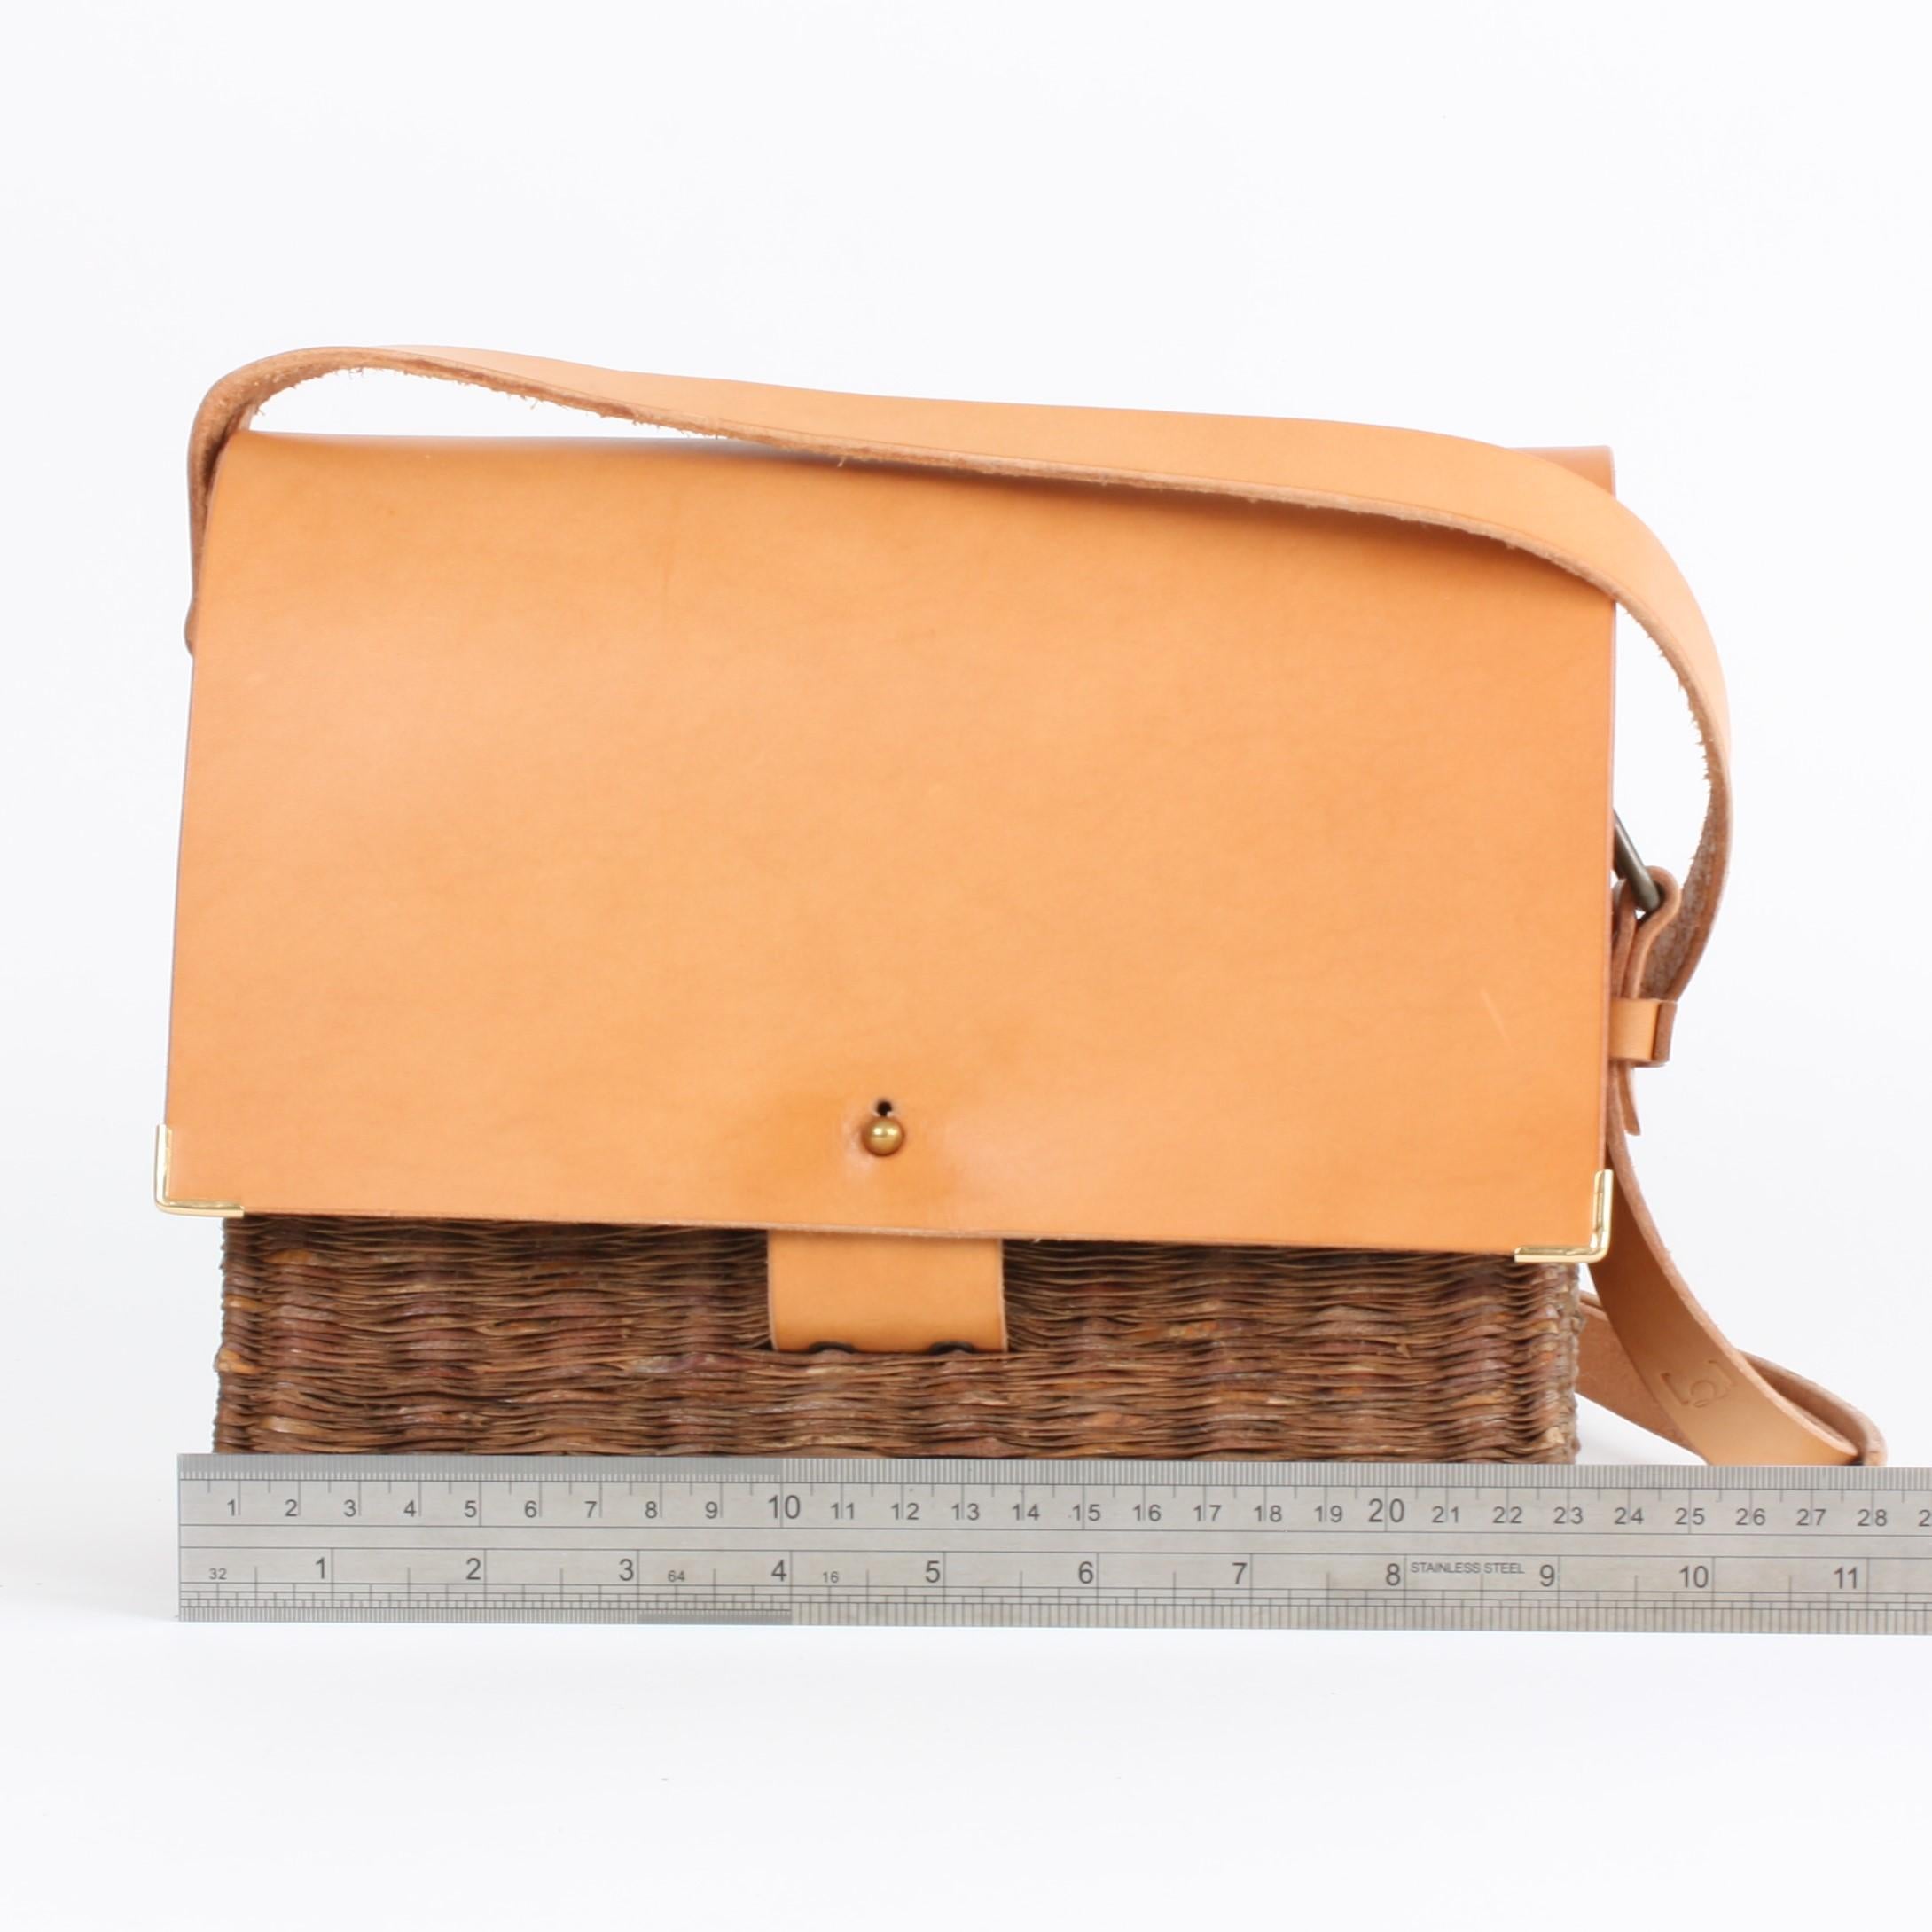 Bespoke Leather and Willow Bark Crossbody Bag - Le Dévoué For Sale 5